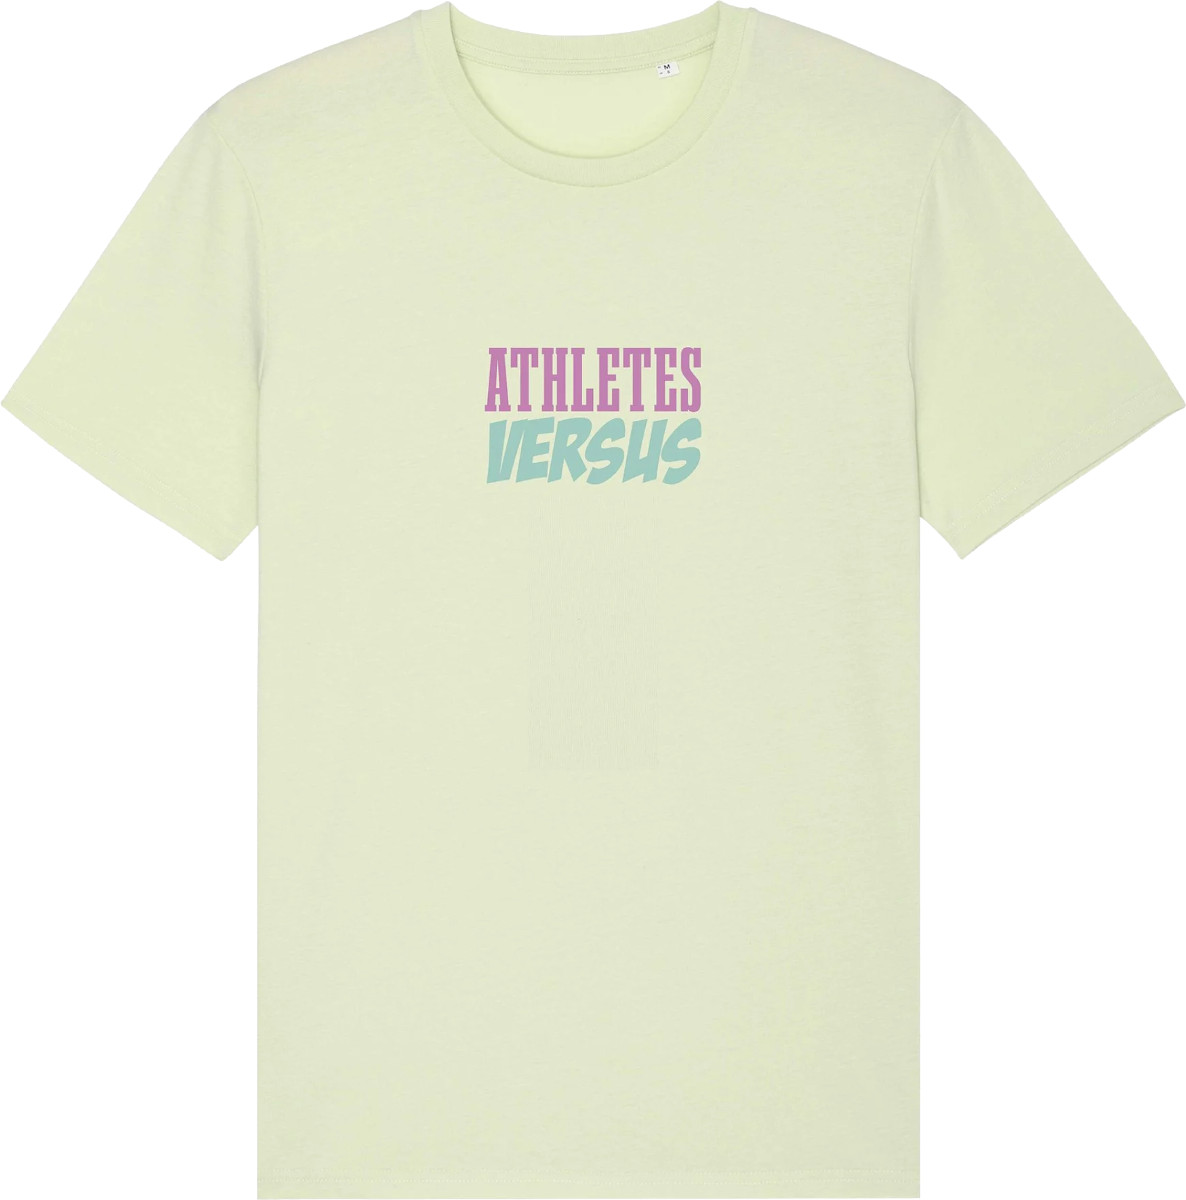 Тениска ATHLETESVERSUS AthletesVS 